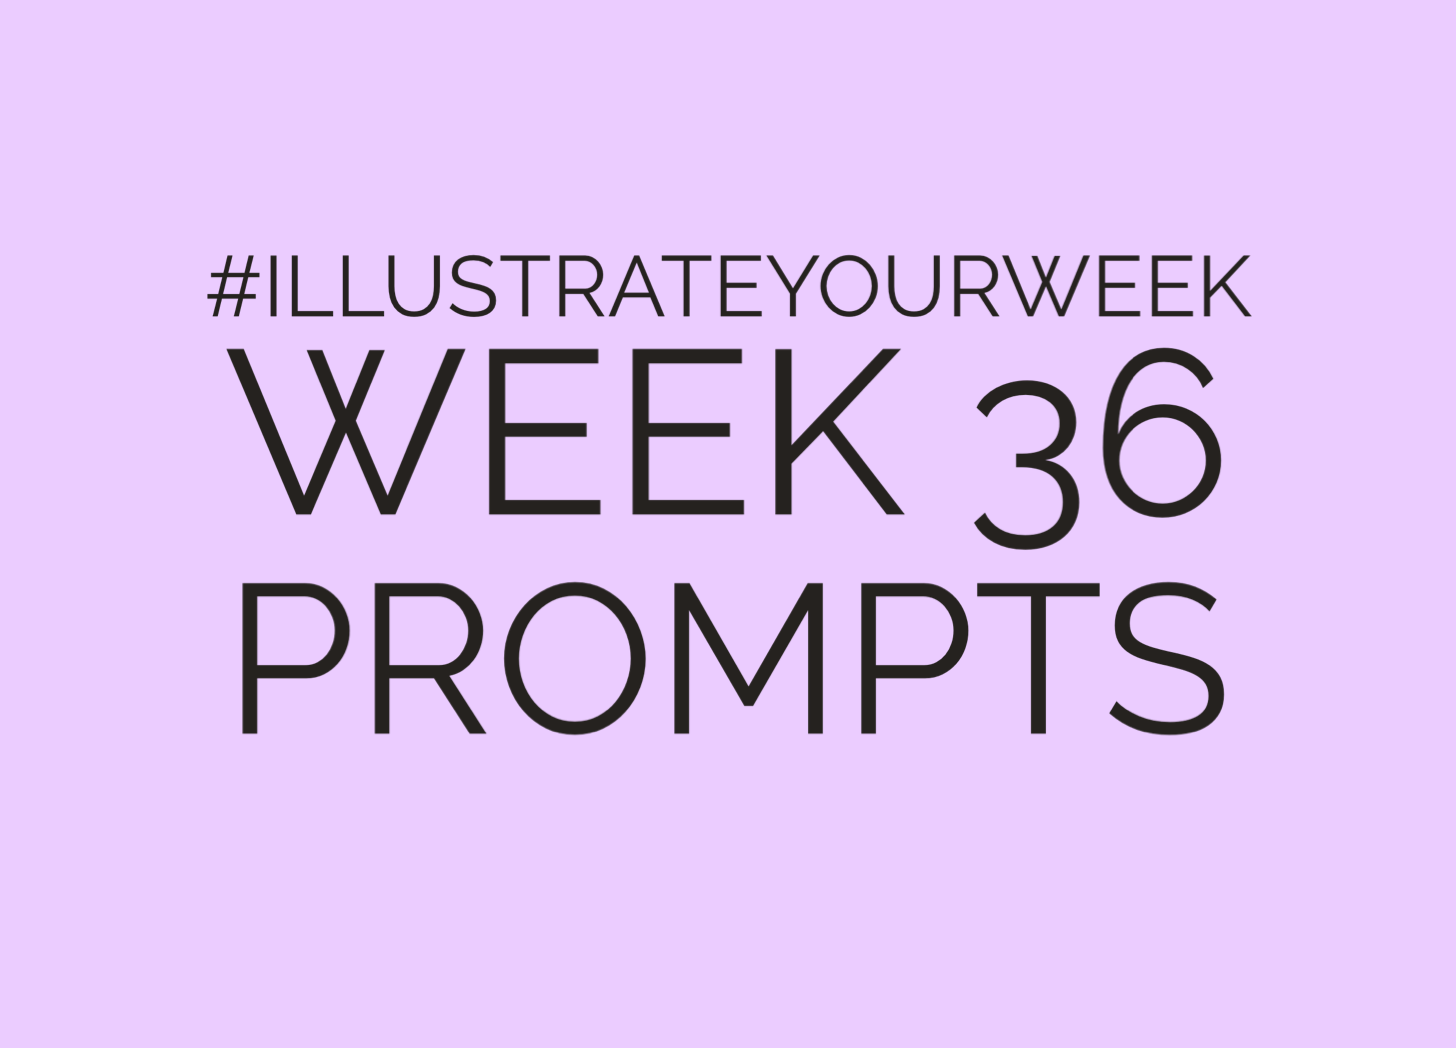 Week 36 Illustrate Your Week Prompts Headline Only